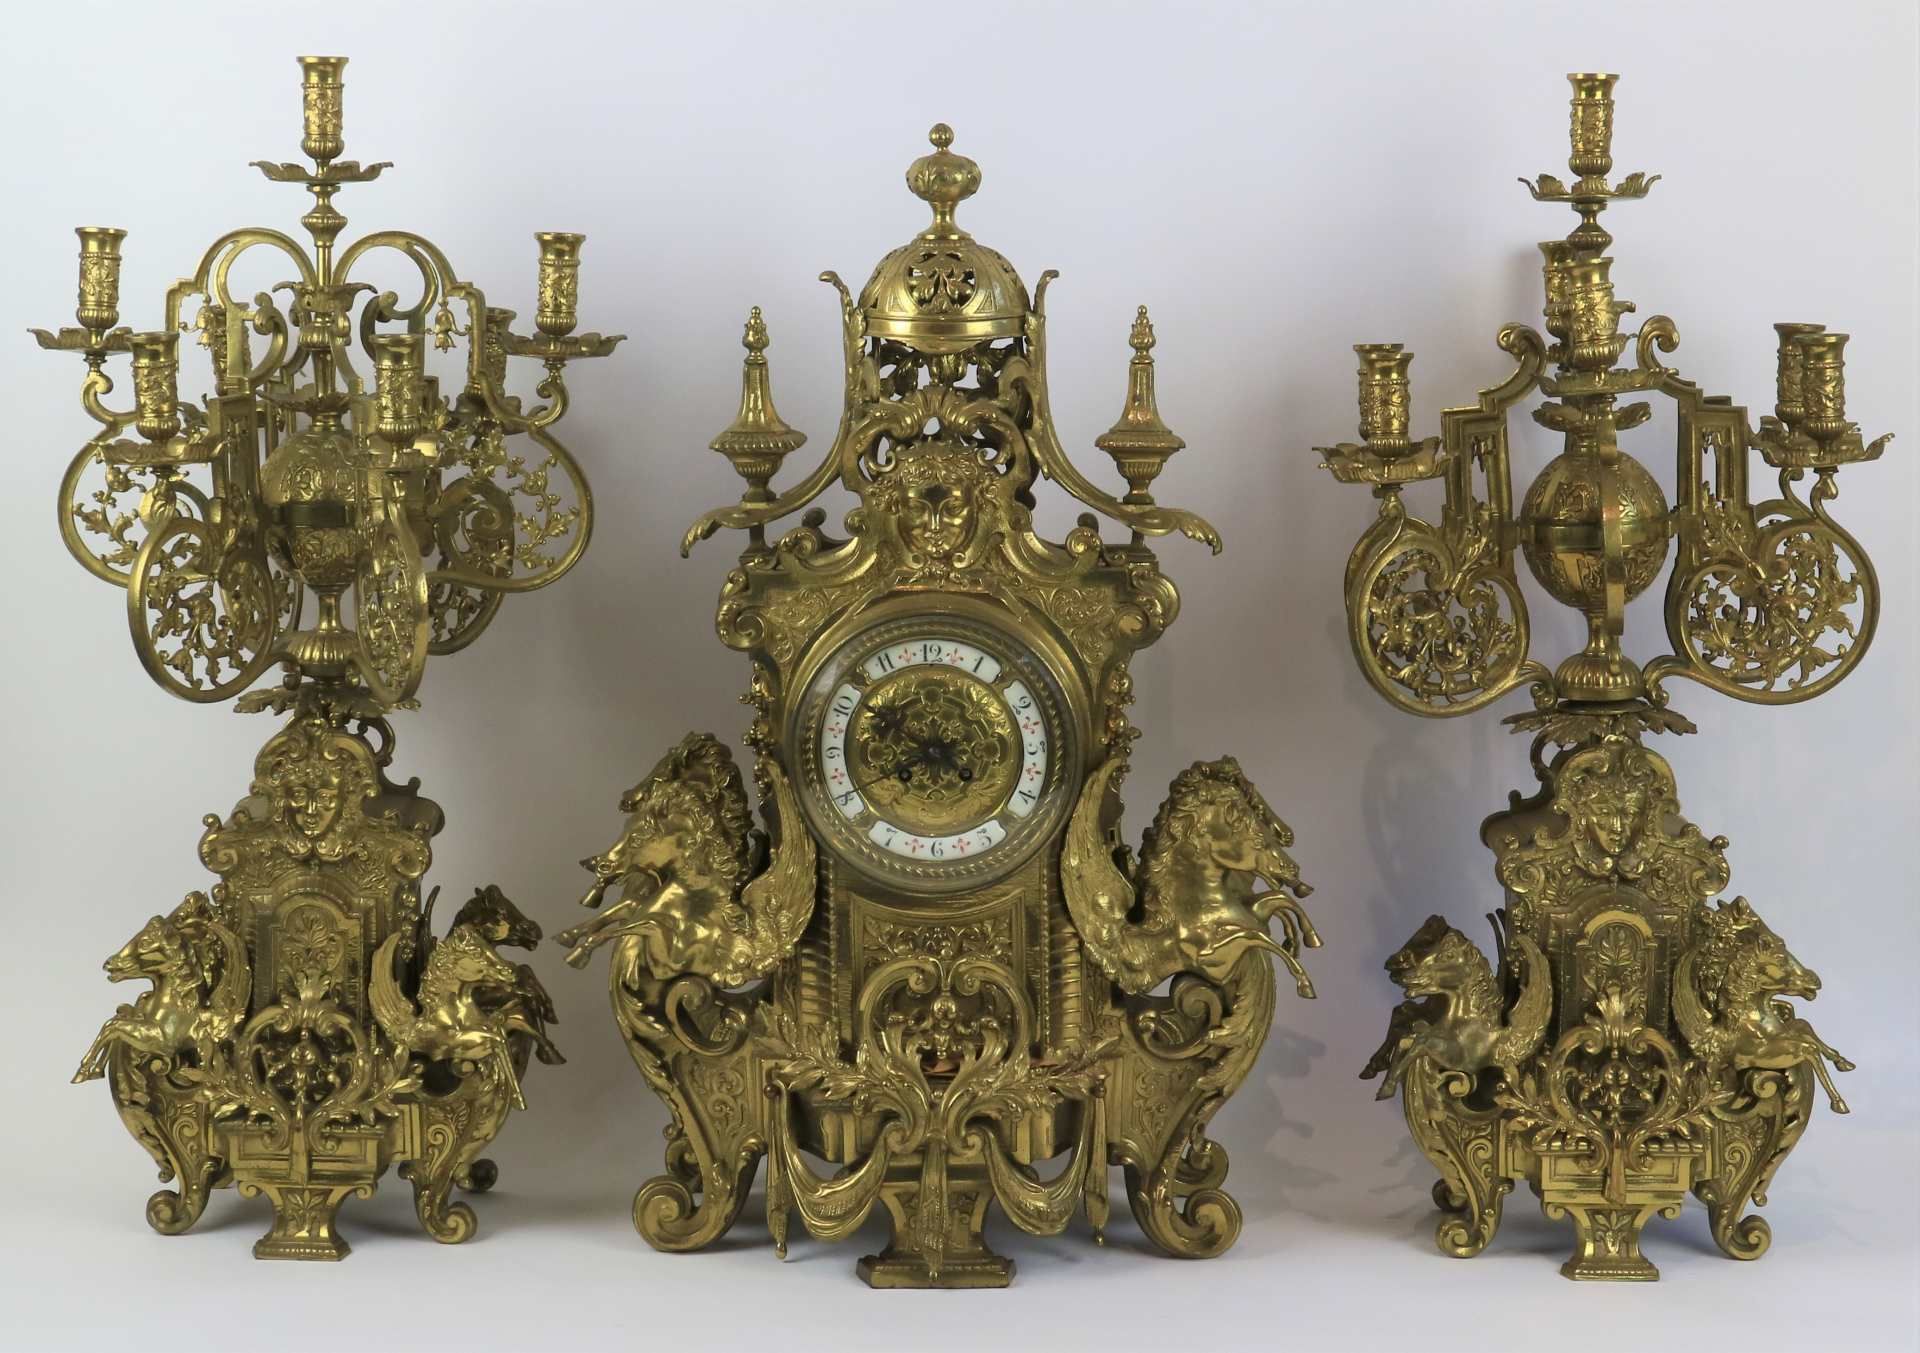 An imposing ormolu mantelpiece with candlesticks